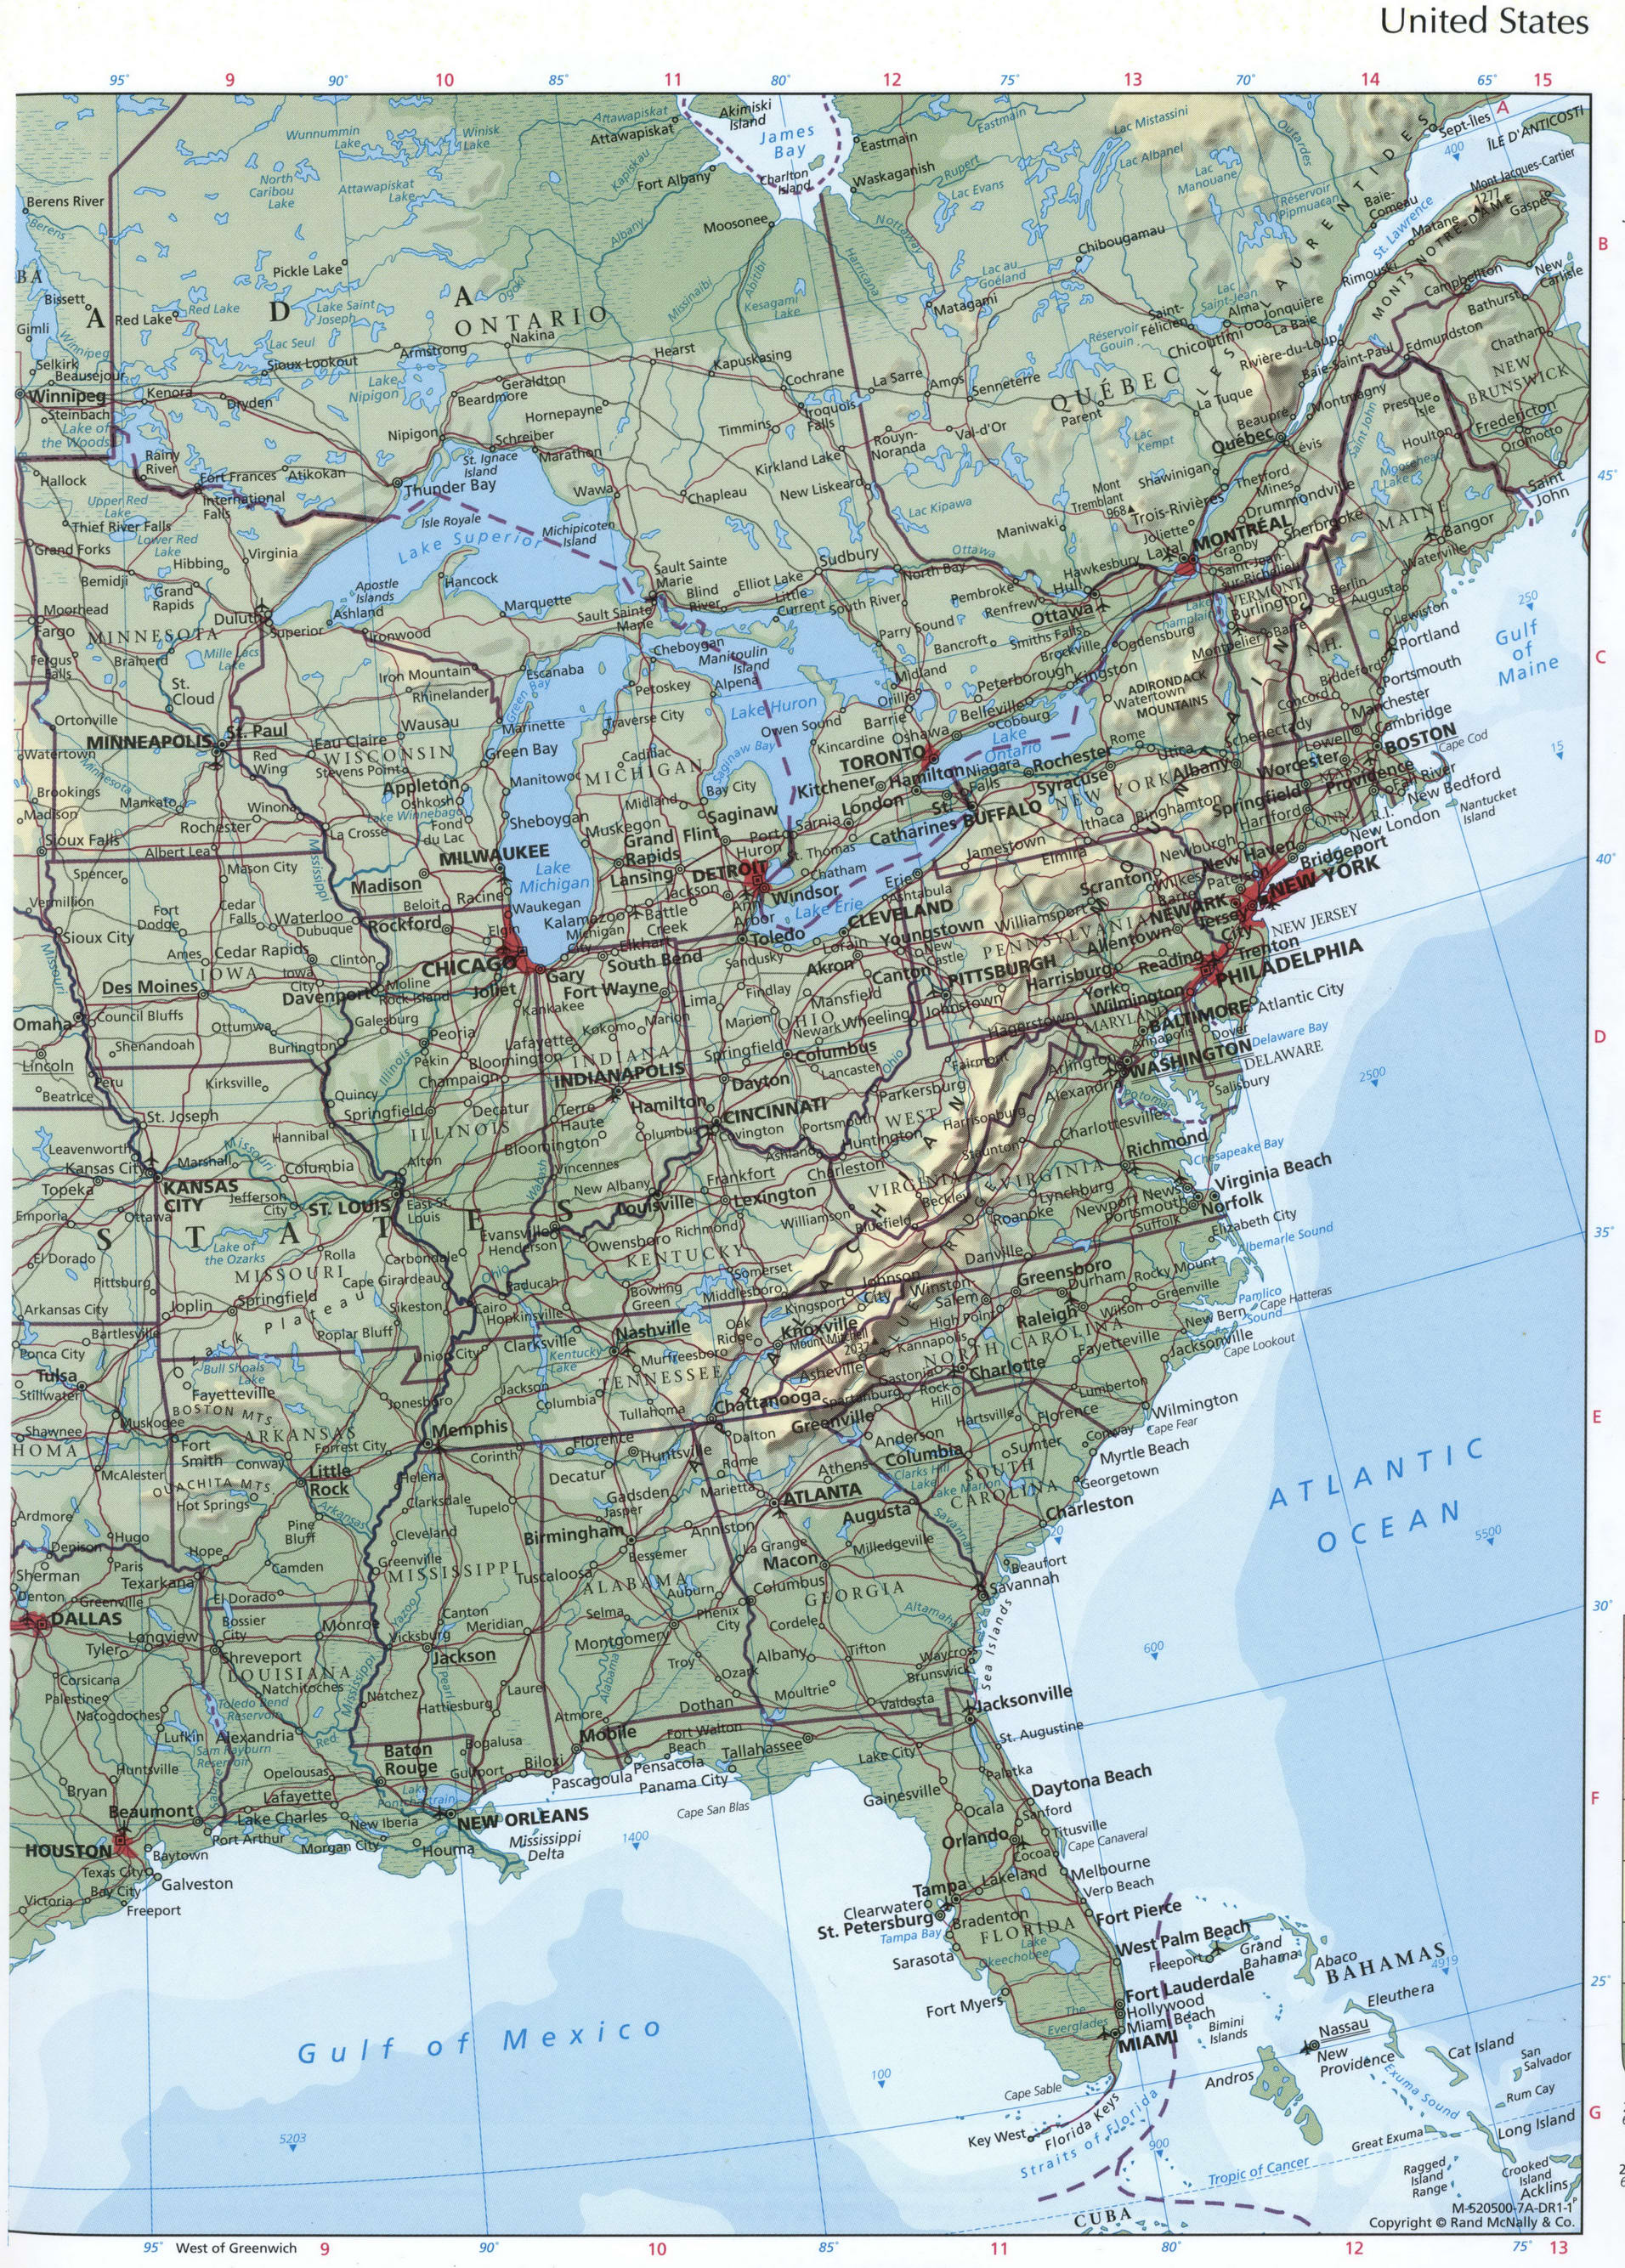 USA eastern coast map